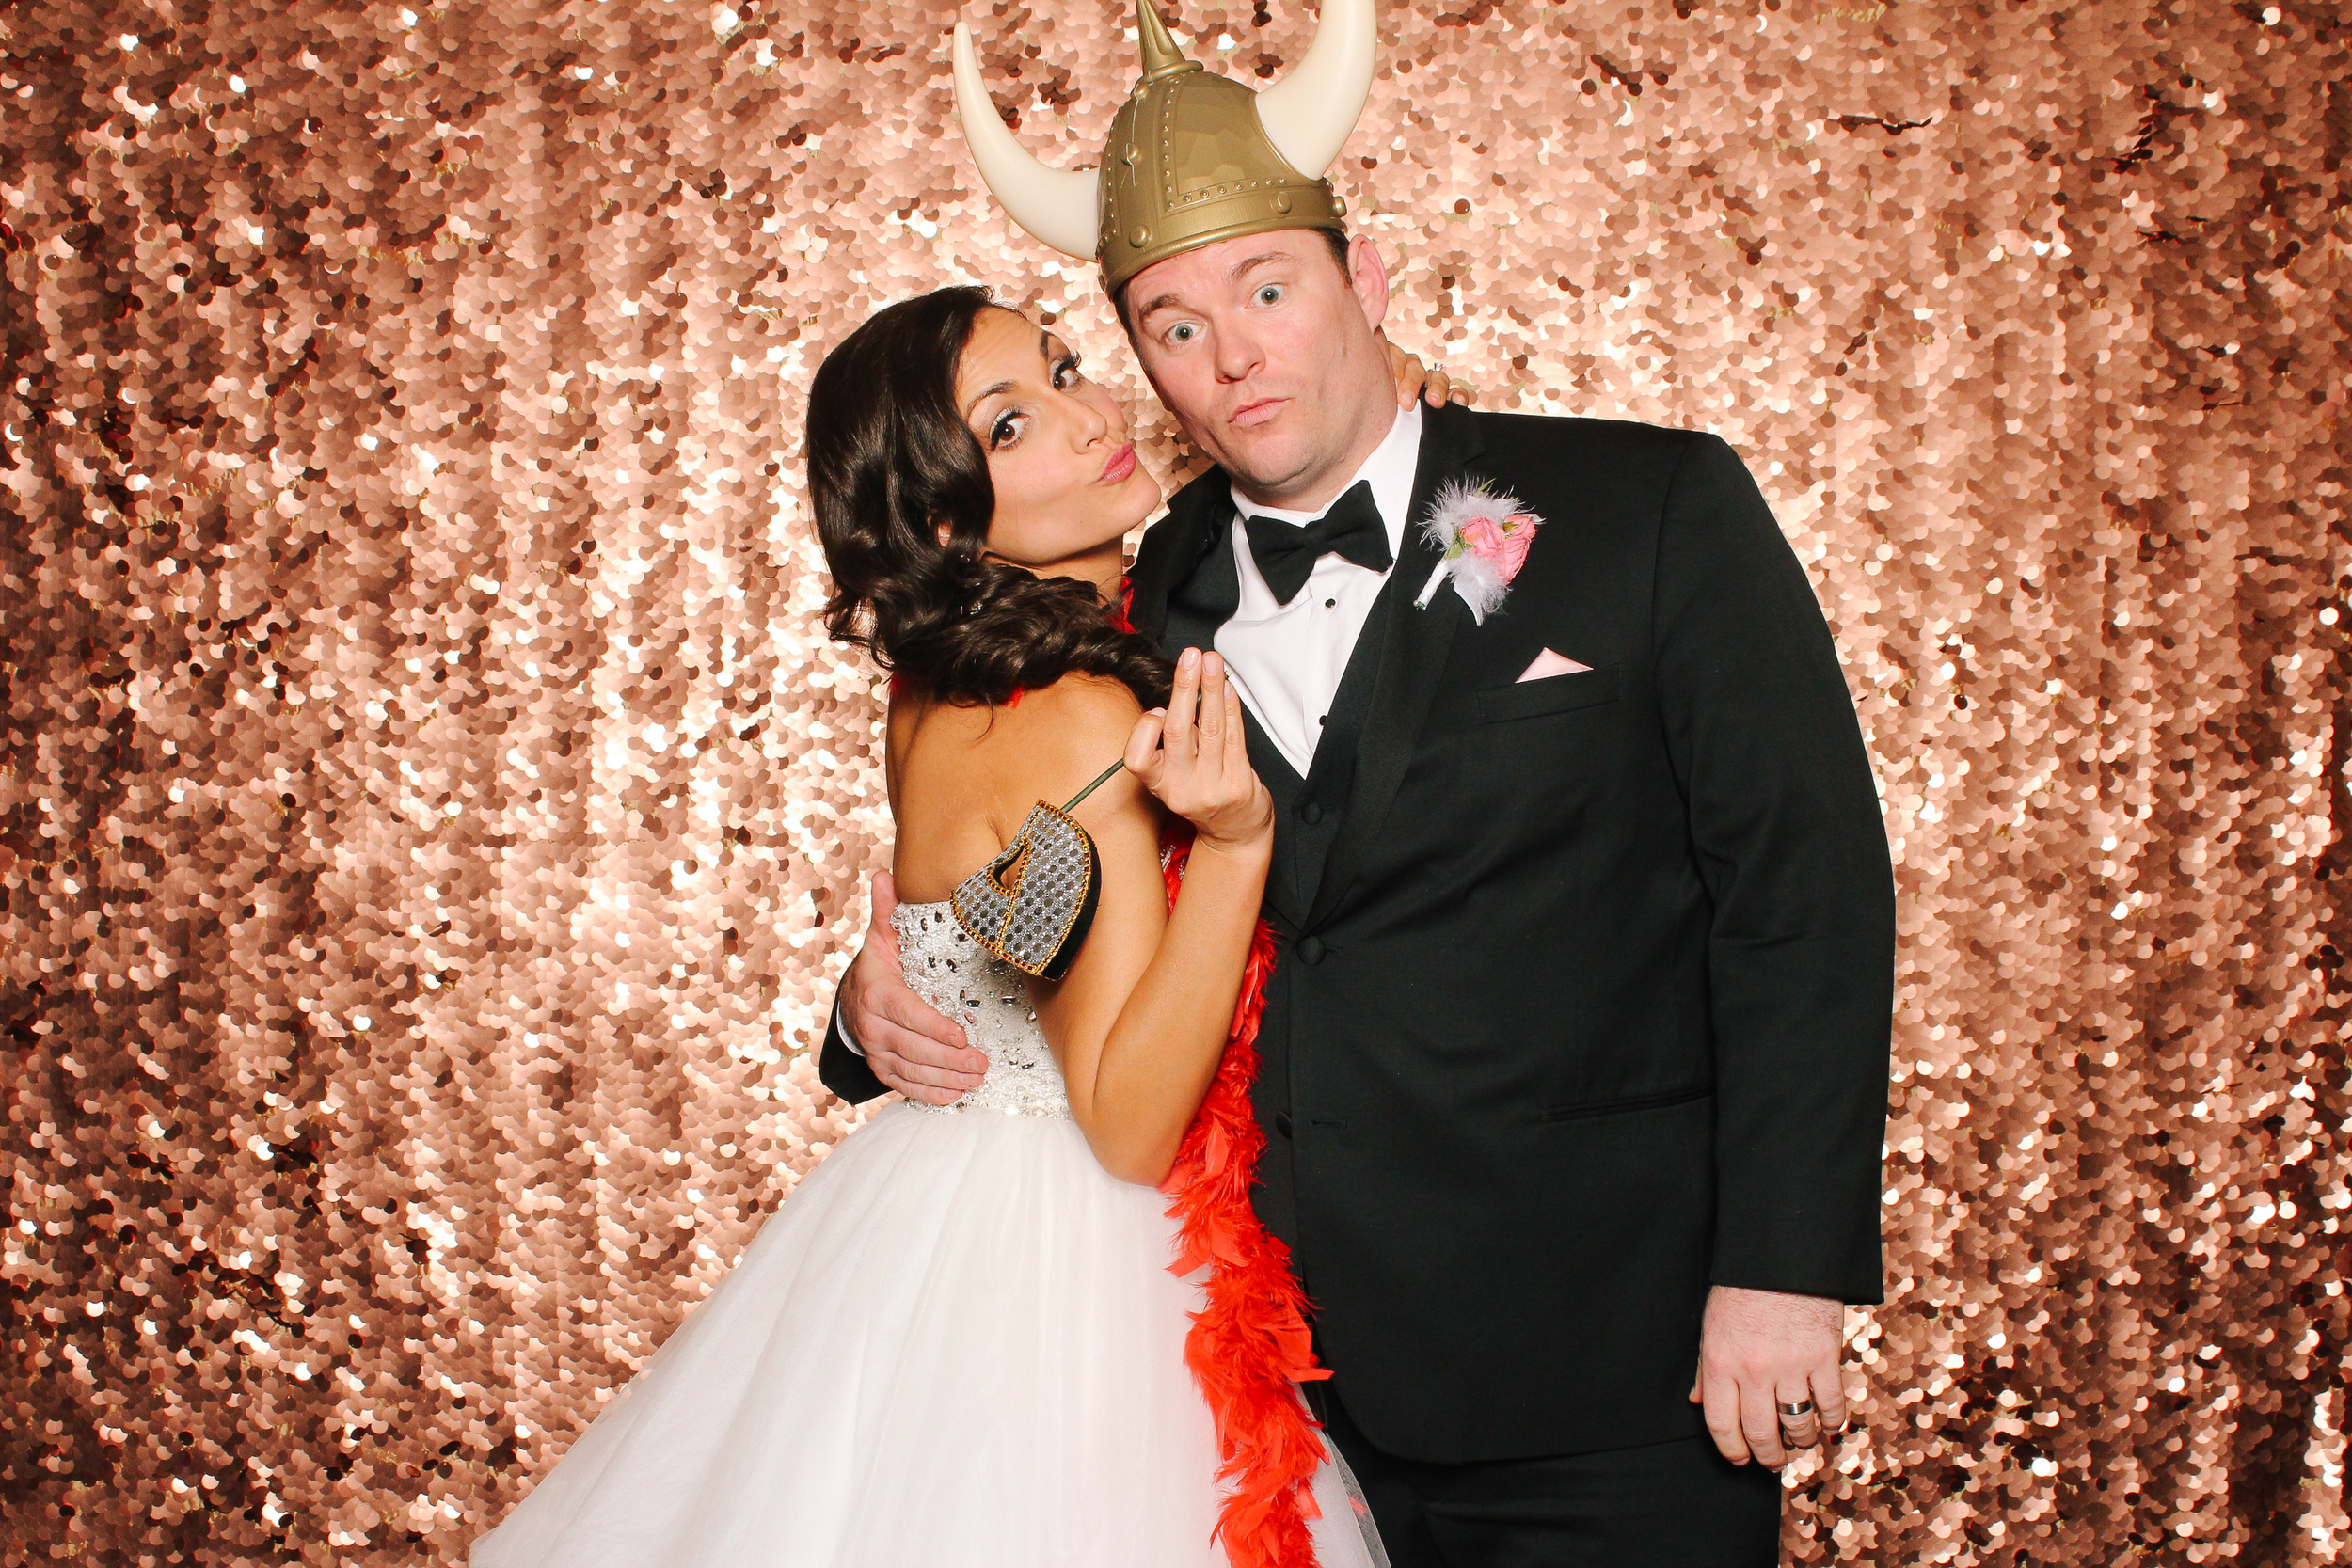 00002-Marriot Cleveland Hotel Wedding Photobooth-20141115.jpg